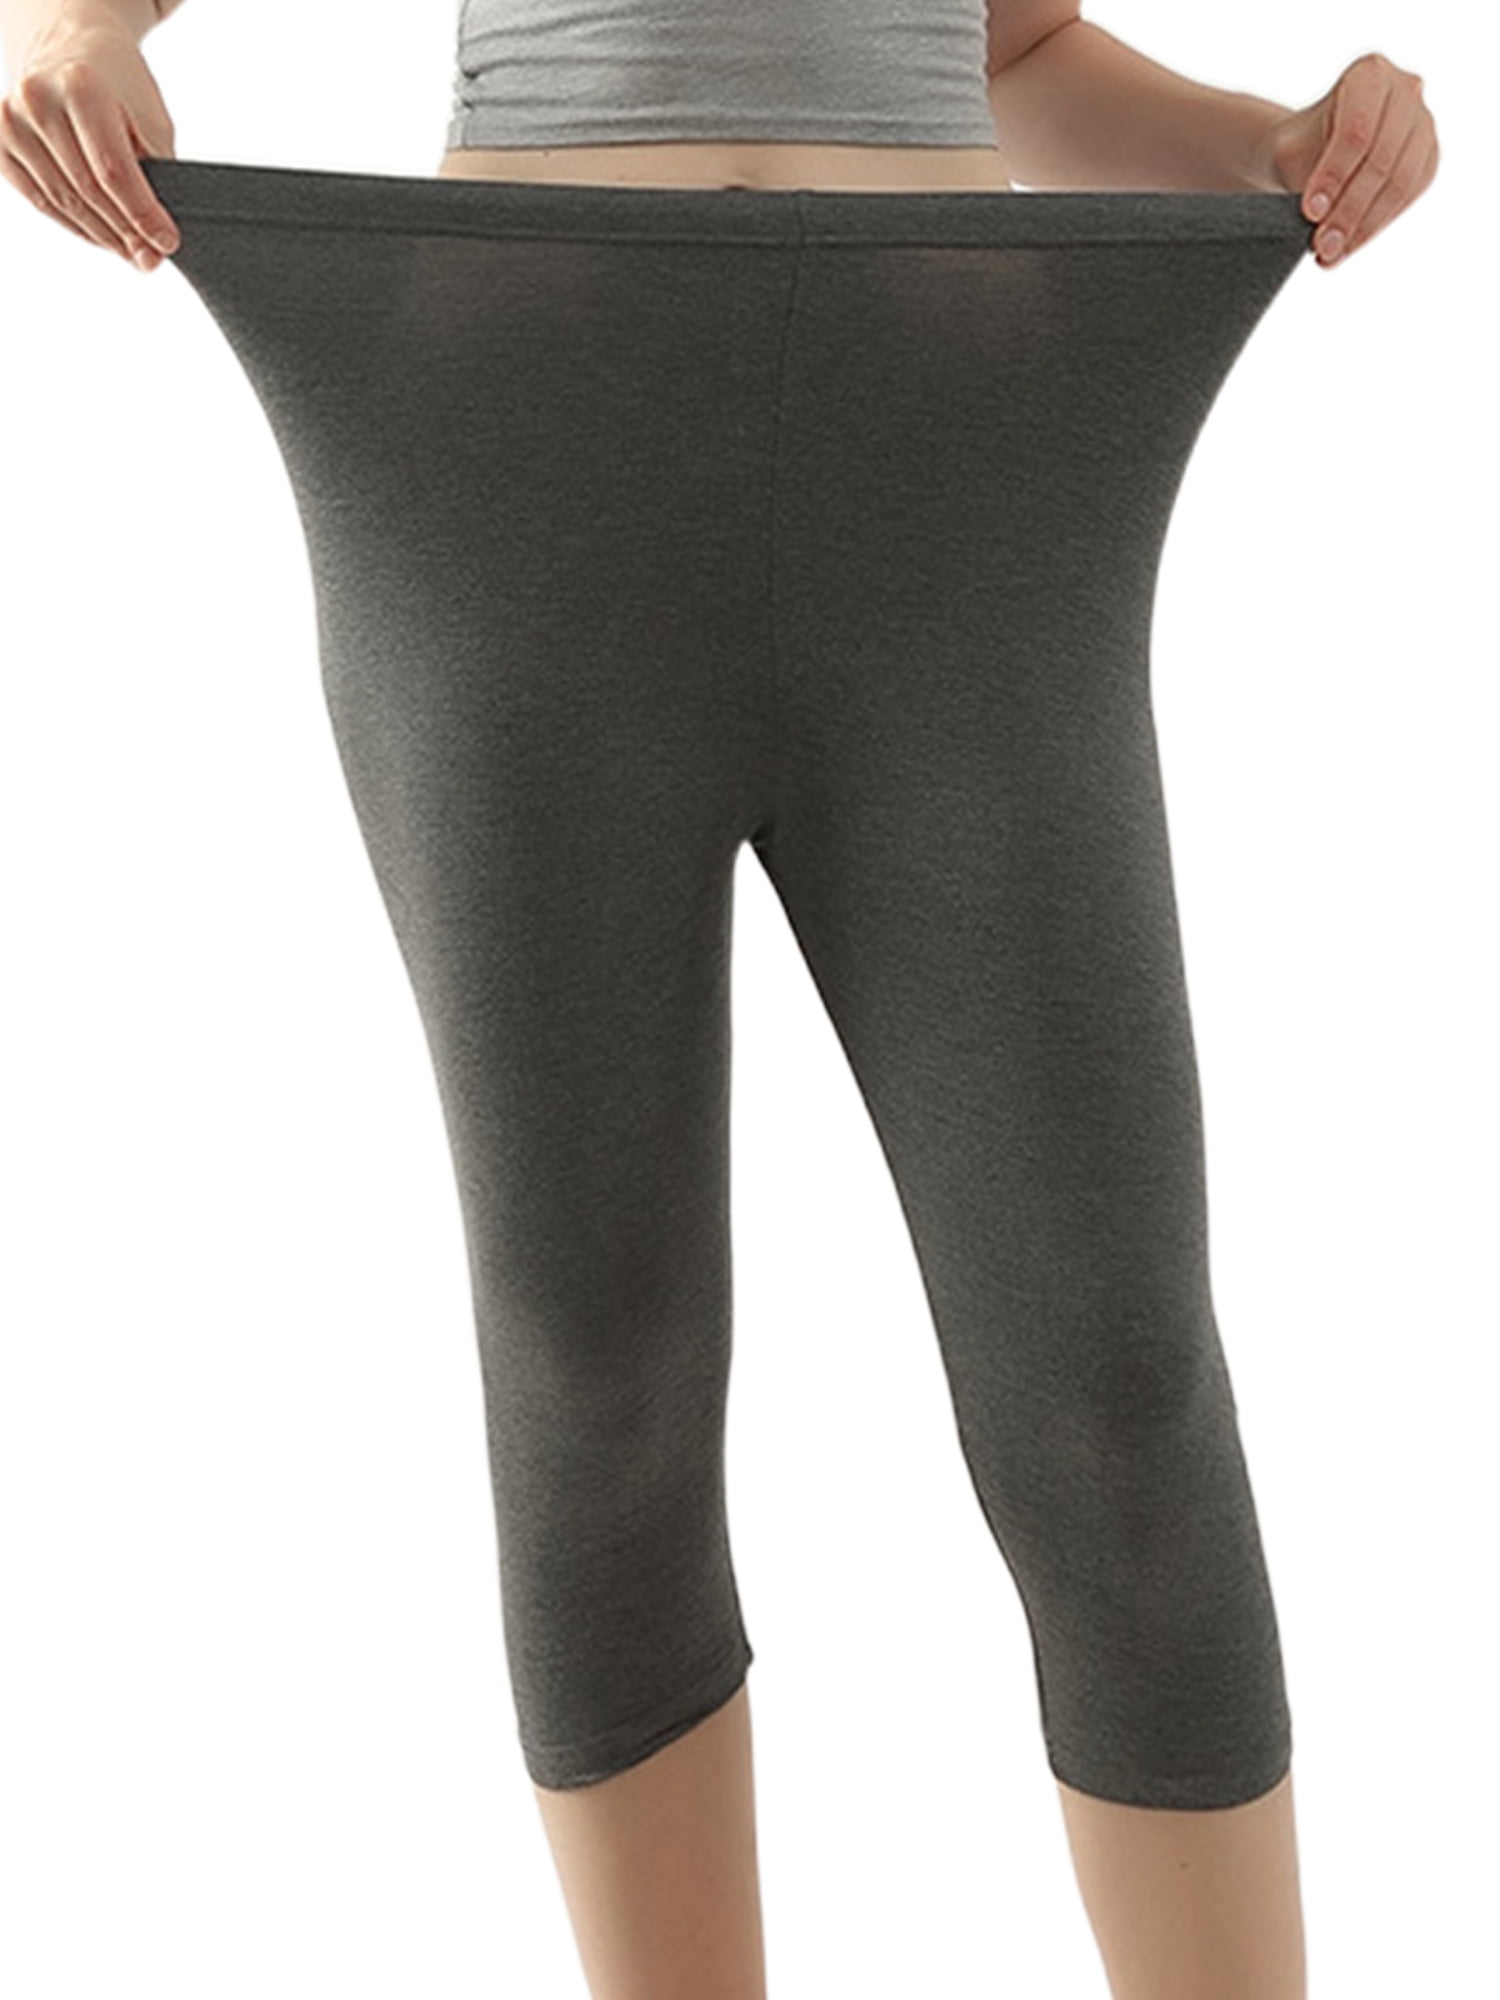 Frontwalk Capri Leggings for Women Plus Size Stretch Cotton Sleepwear  Oversized Lightweight Yoga Cropped Pants Bottoms Dark Gray 7XL